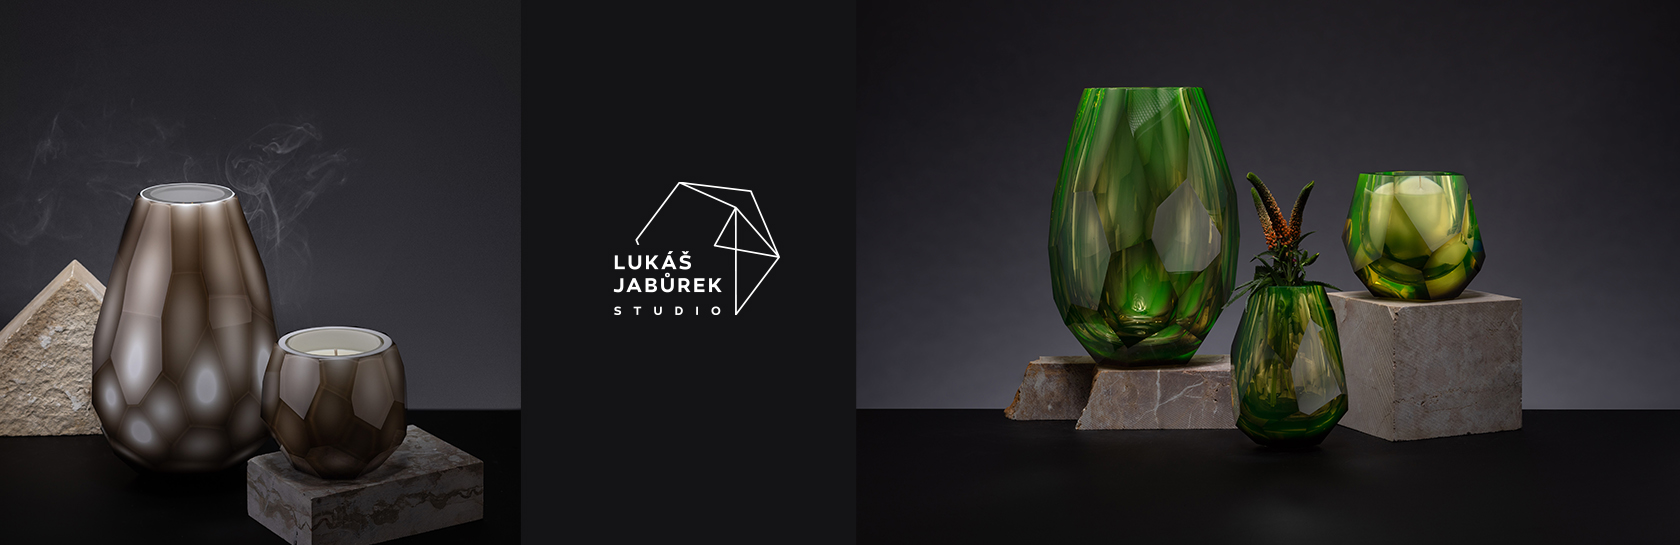 Lukas Jaburek Studio